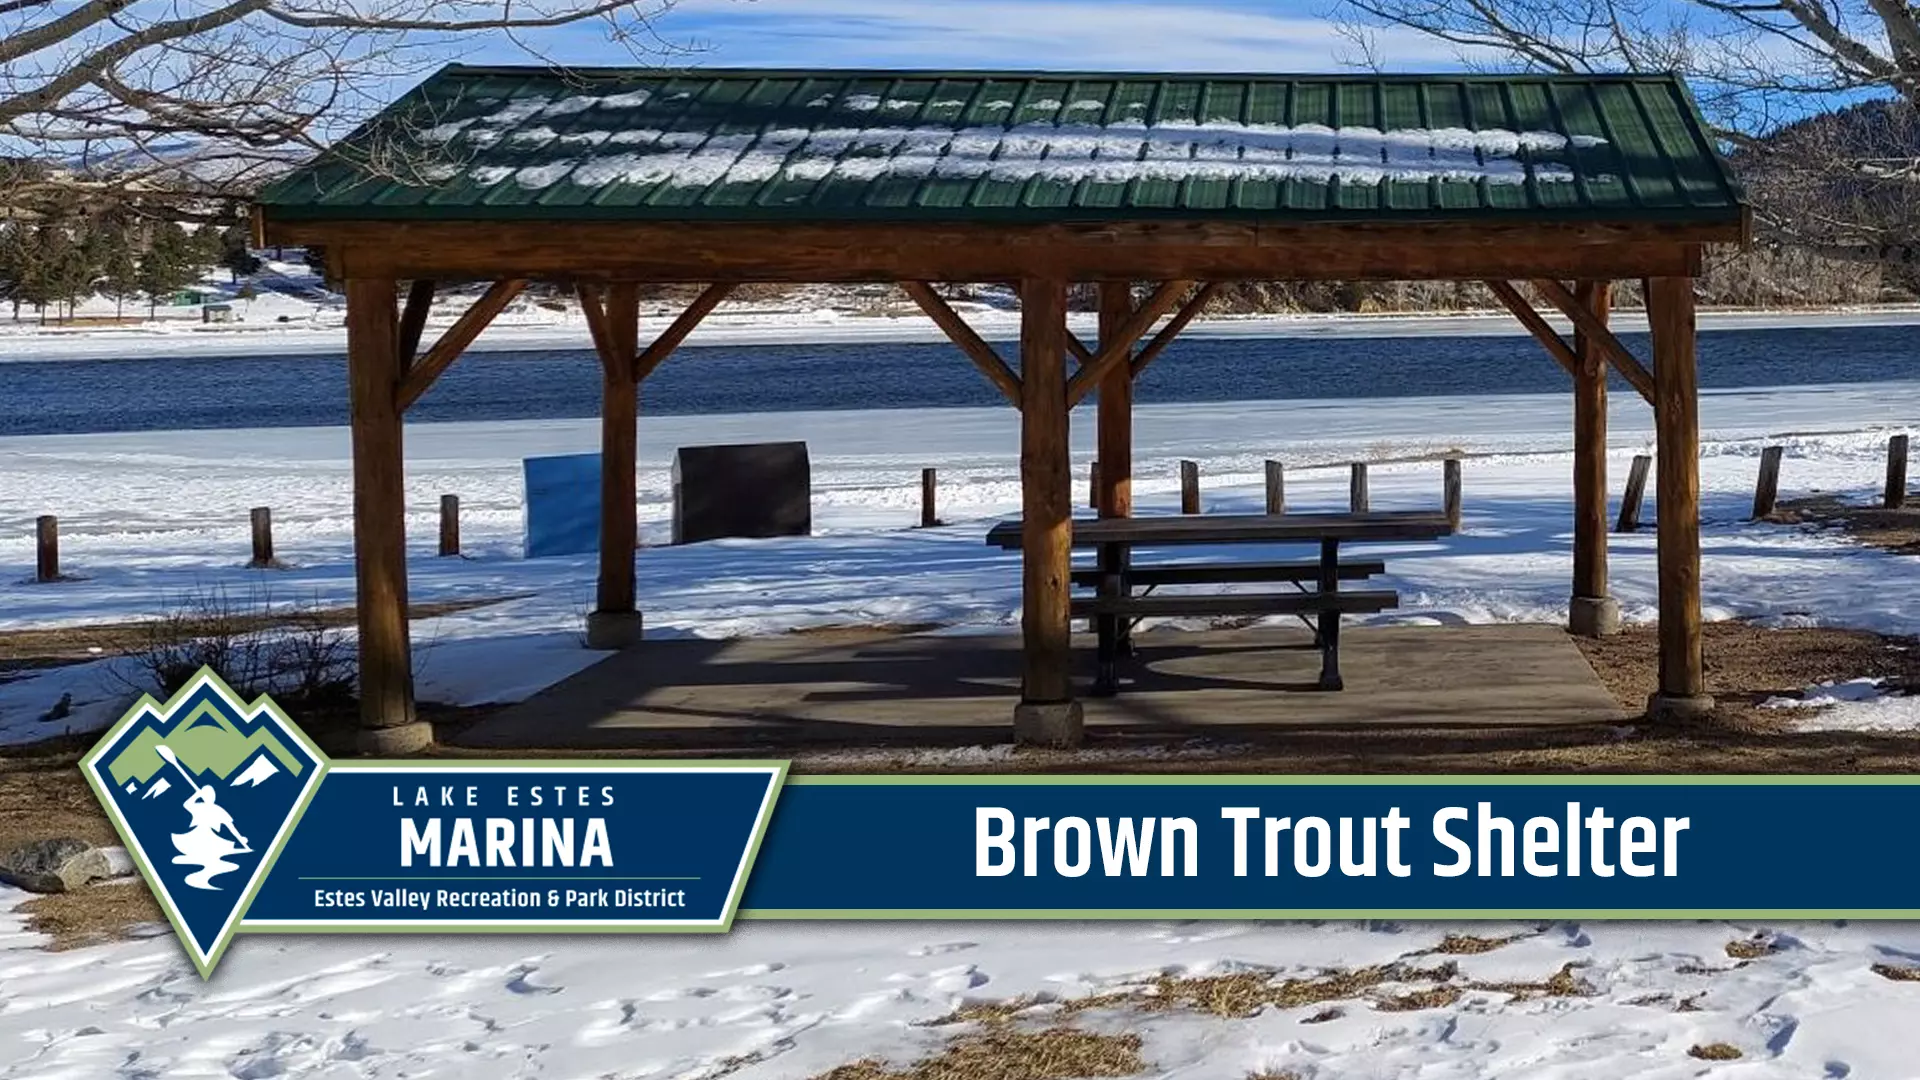 Brown Trout Shelter at Lake Estes